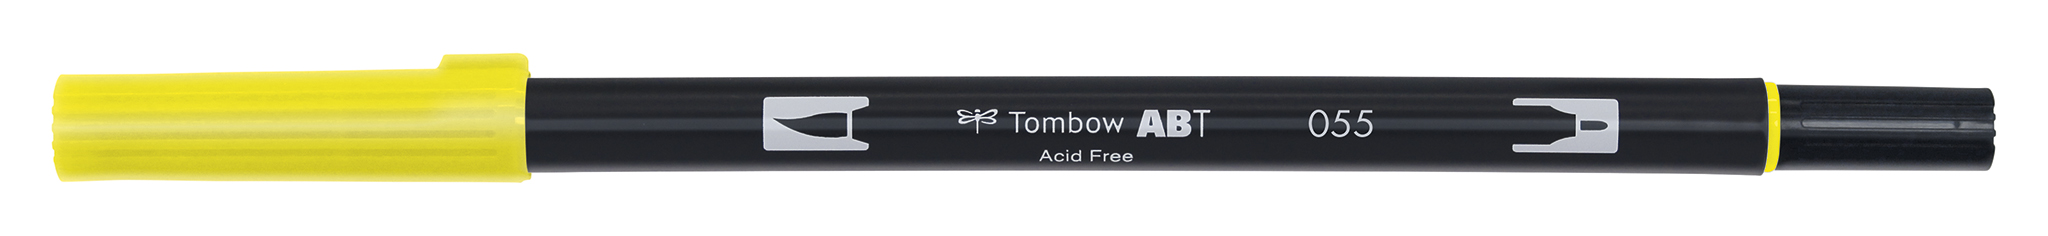 Tombow Art Brush Pen, process yellow